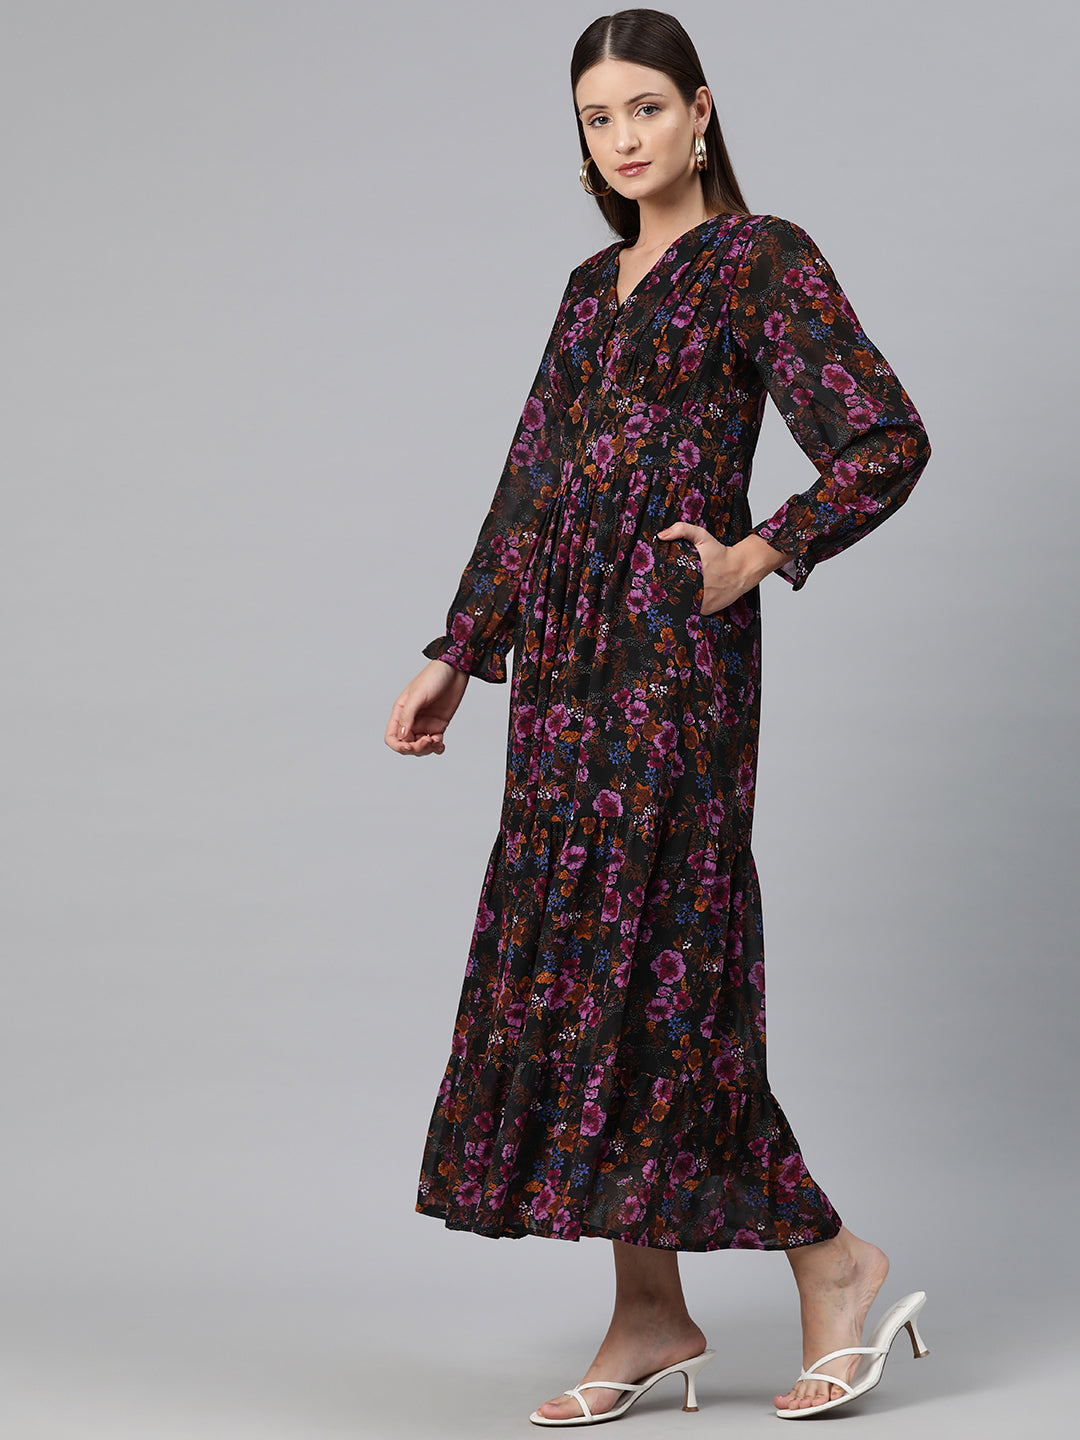 Cottinfab Women Floral Print Bell Sleeve Georgette A-Line Maxi Dress